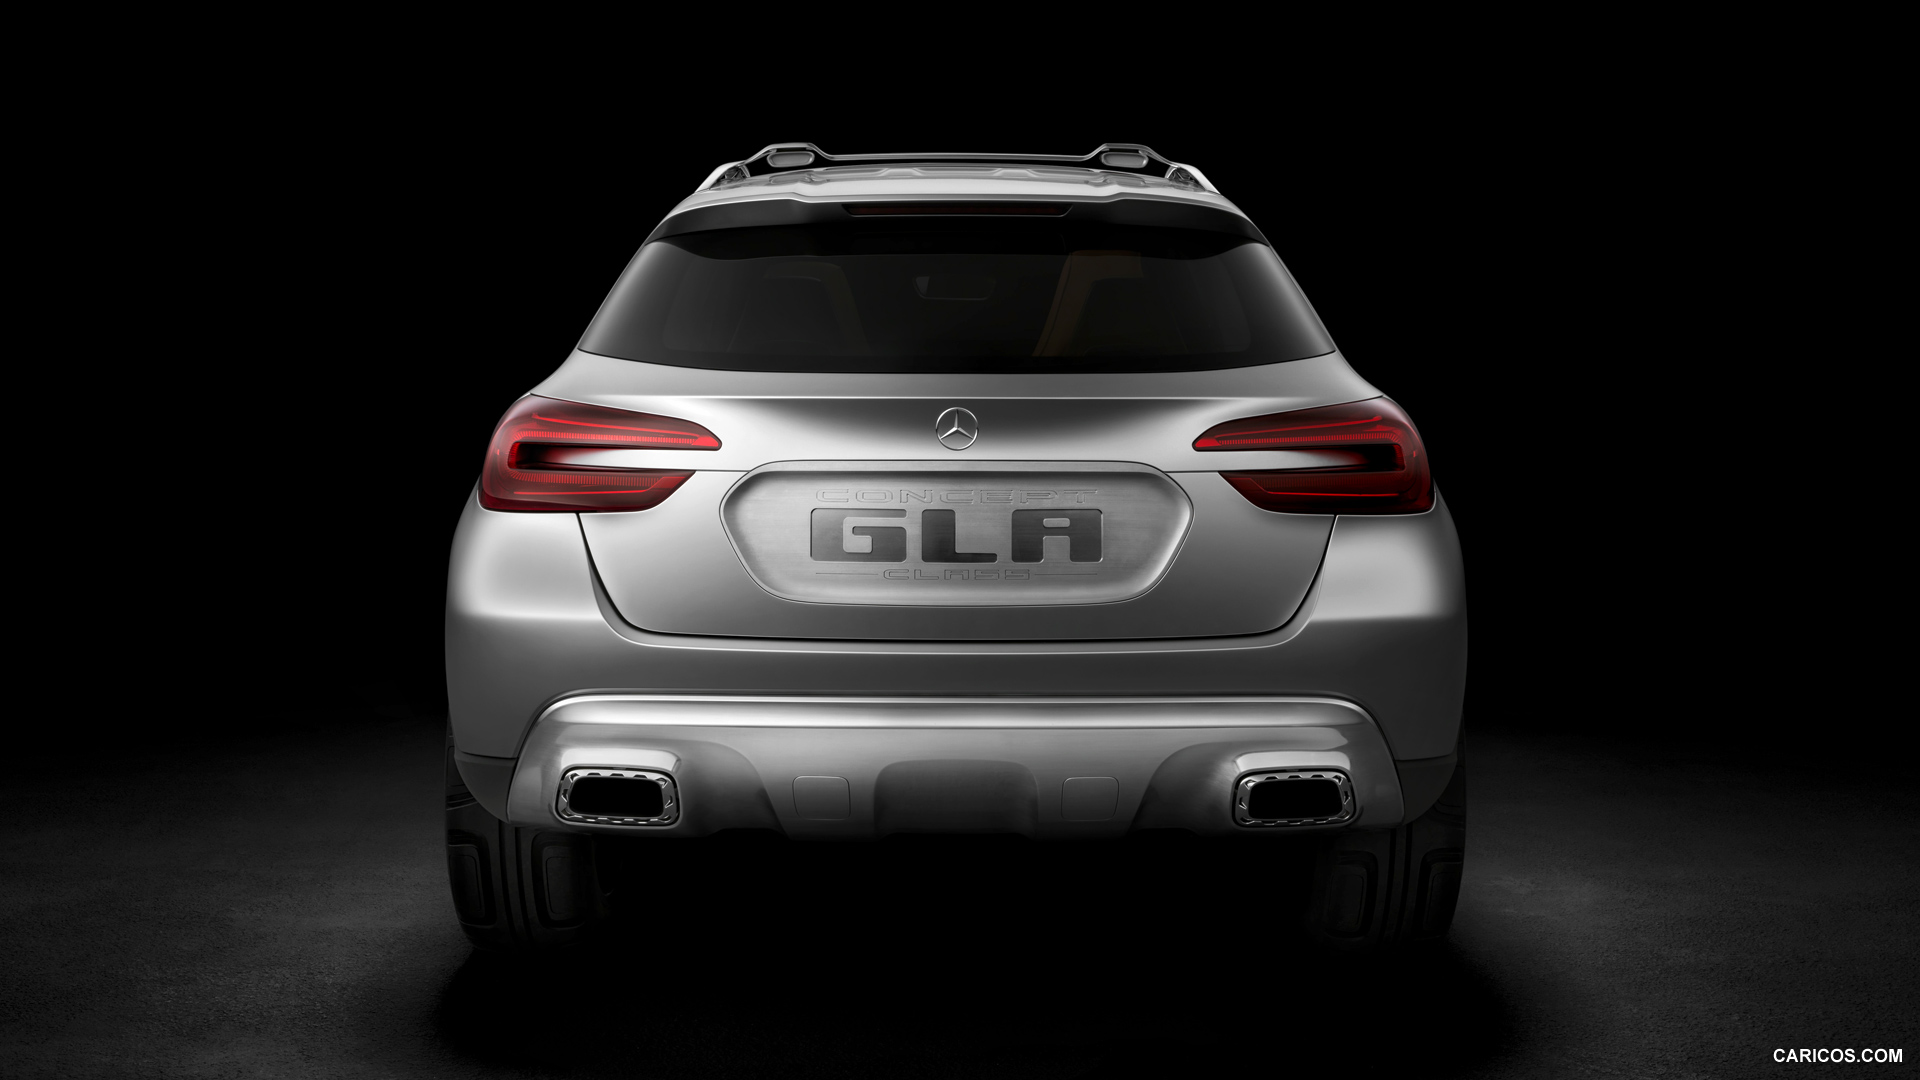 2013 Mercedes-Benz GLA Concept  - Rear, #34 of 42